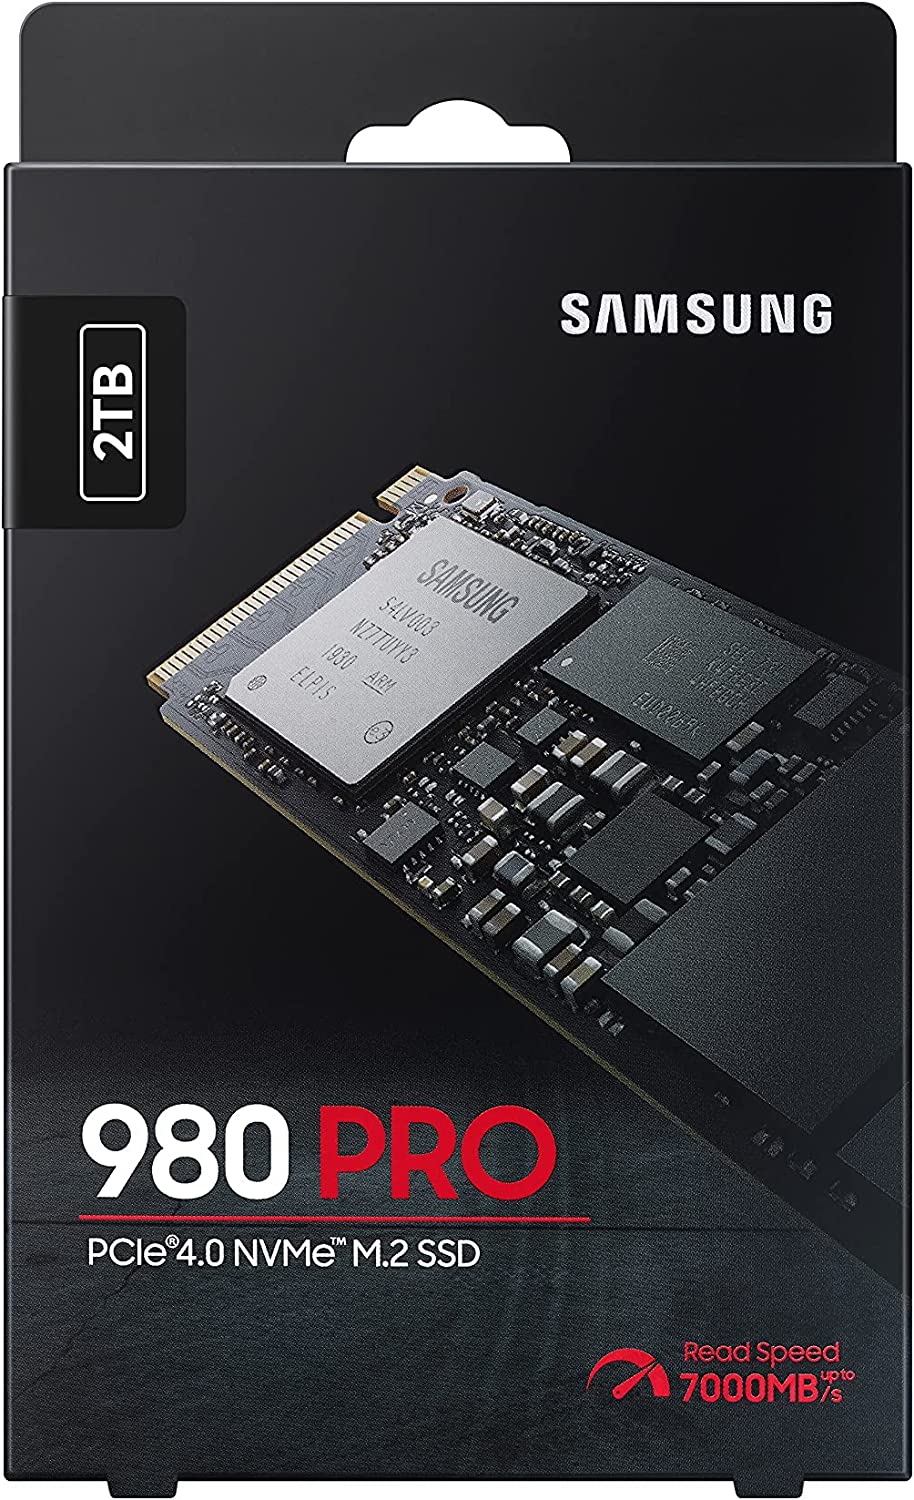 SAMSUNG 980 PRO SSD 2TB PCIe NVMe Gen 4